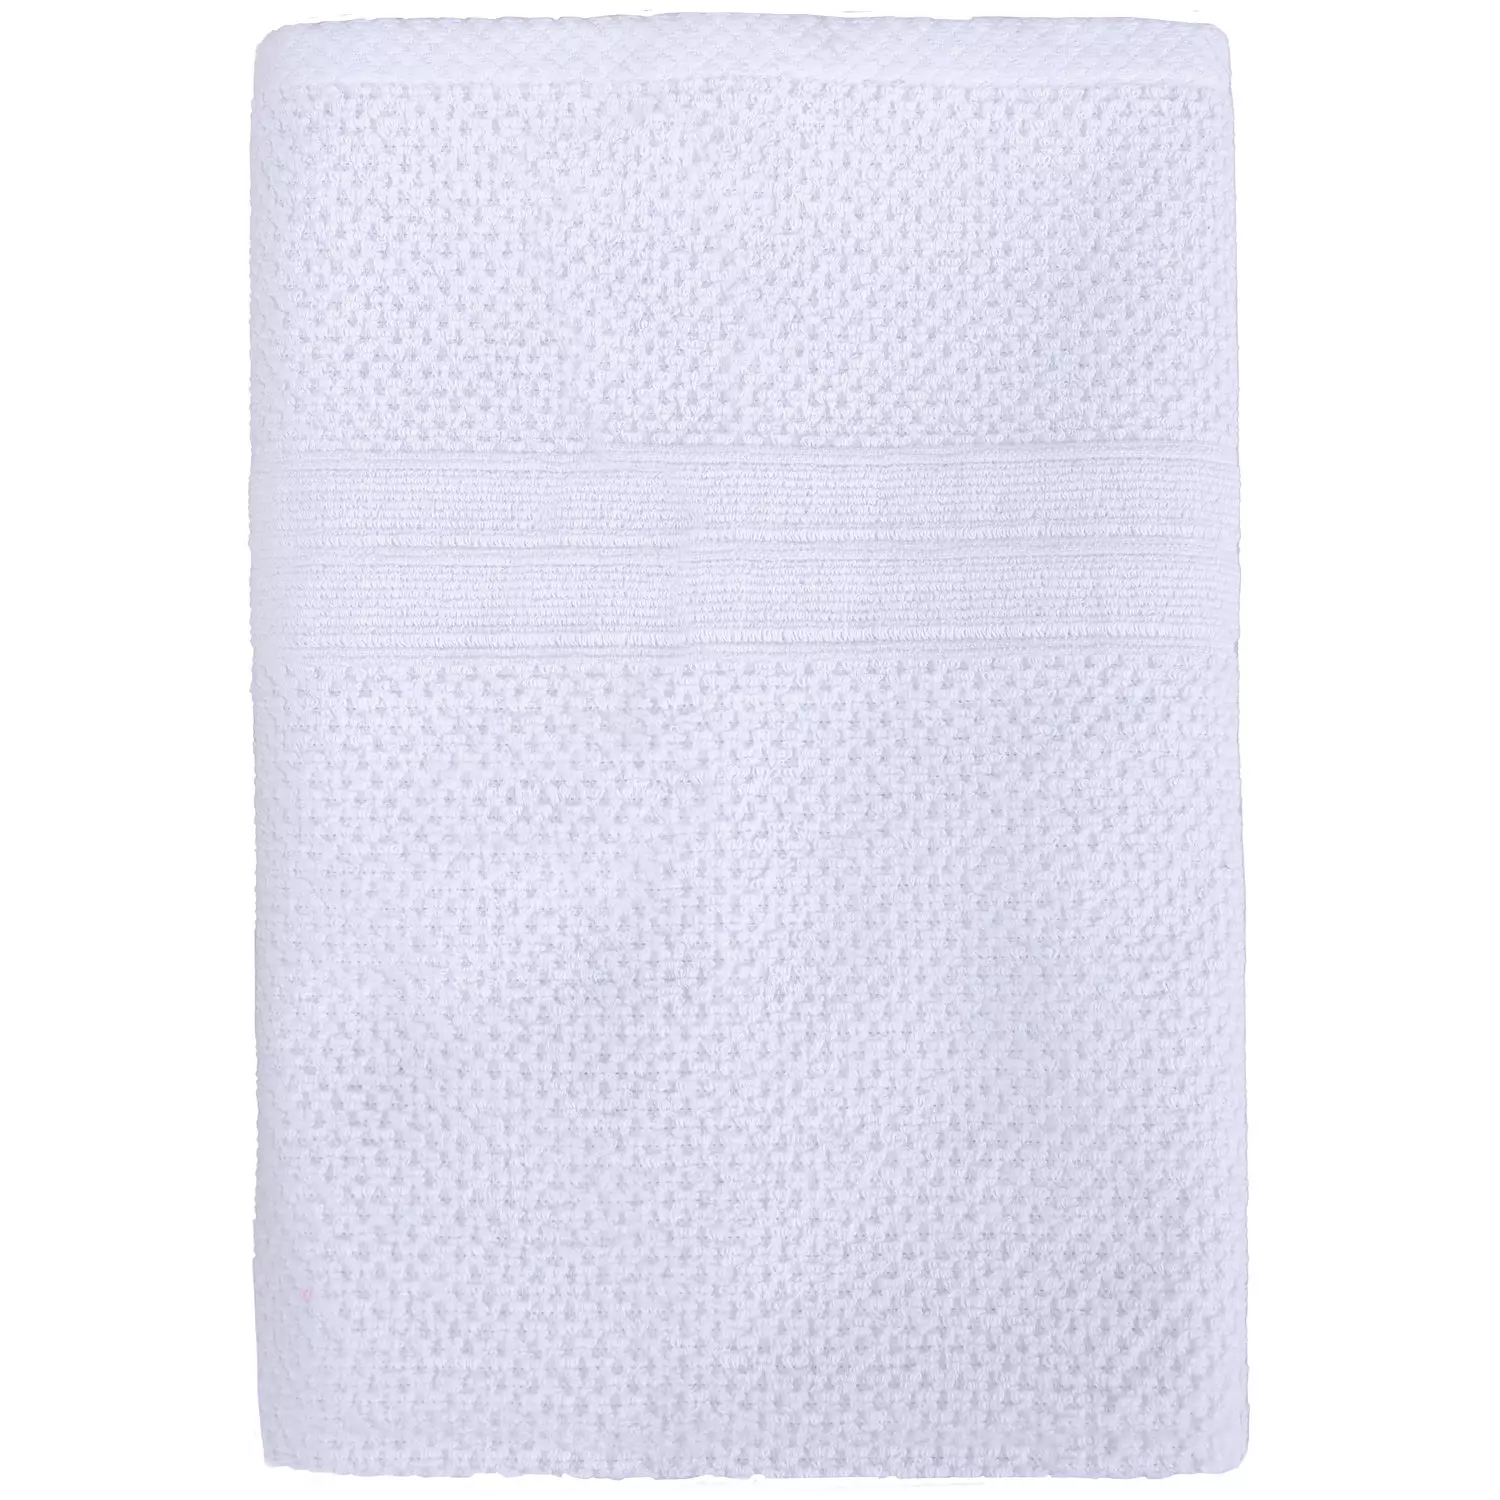 Bath towel, 25"x50", white